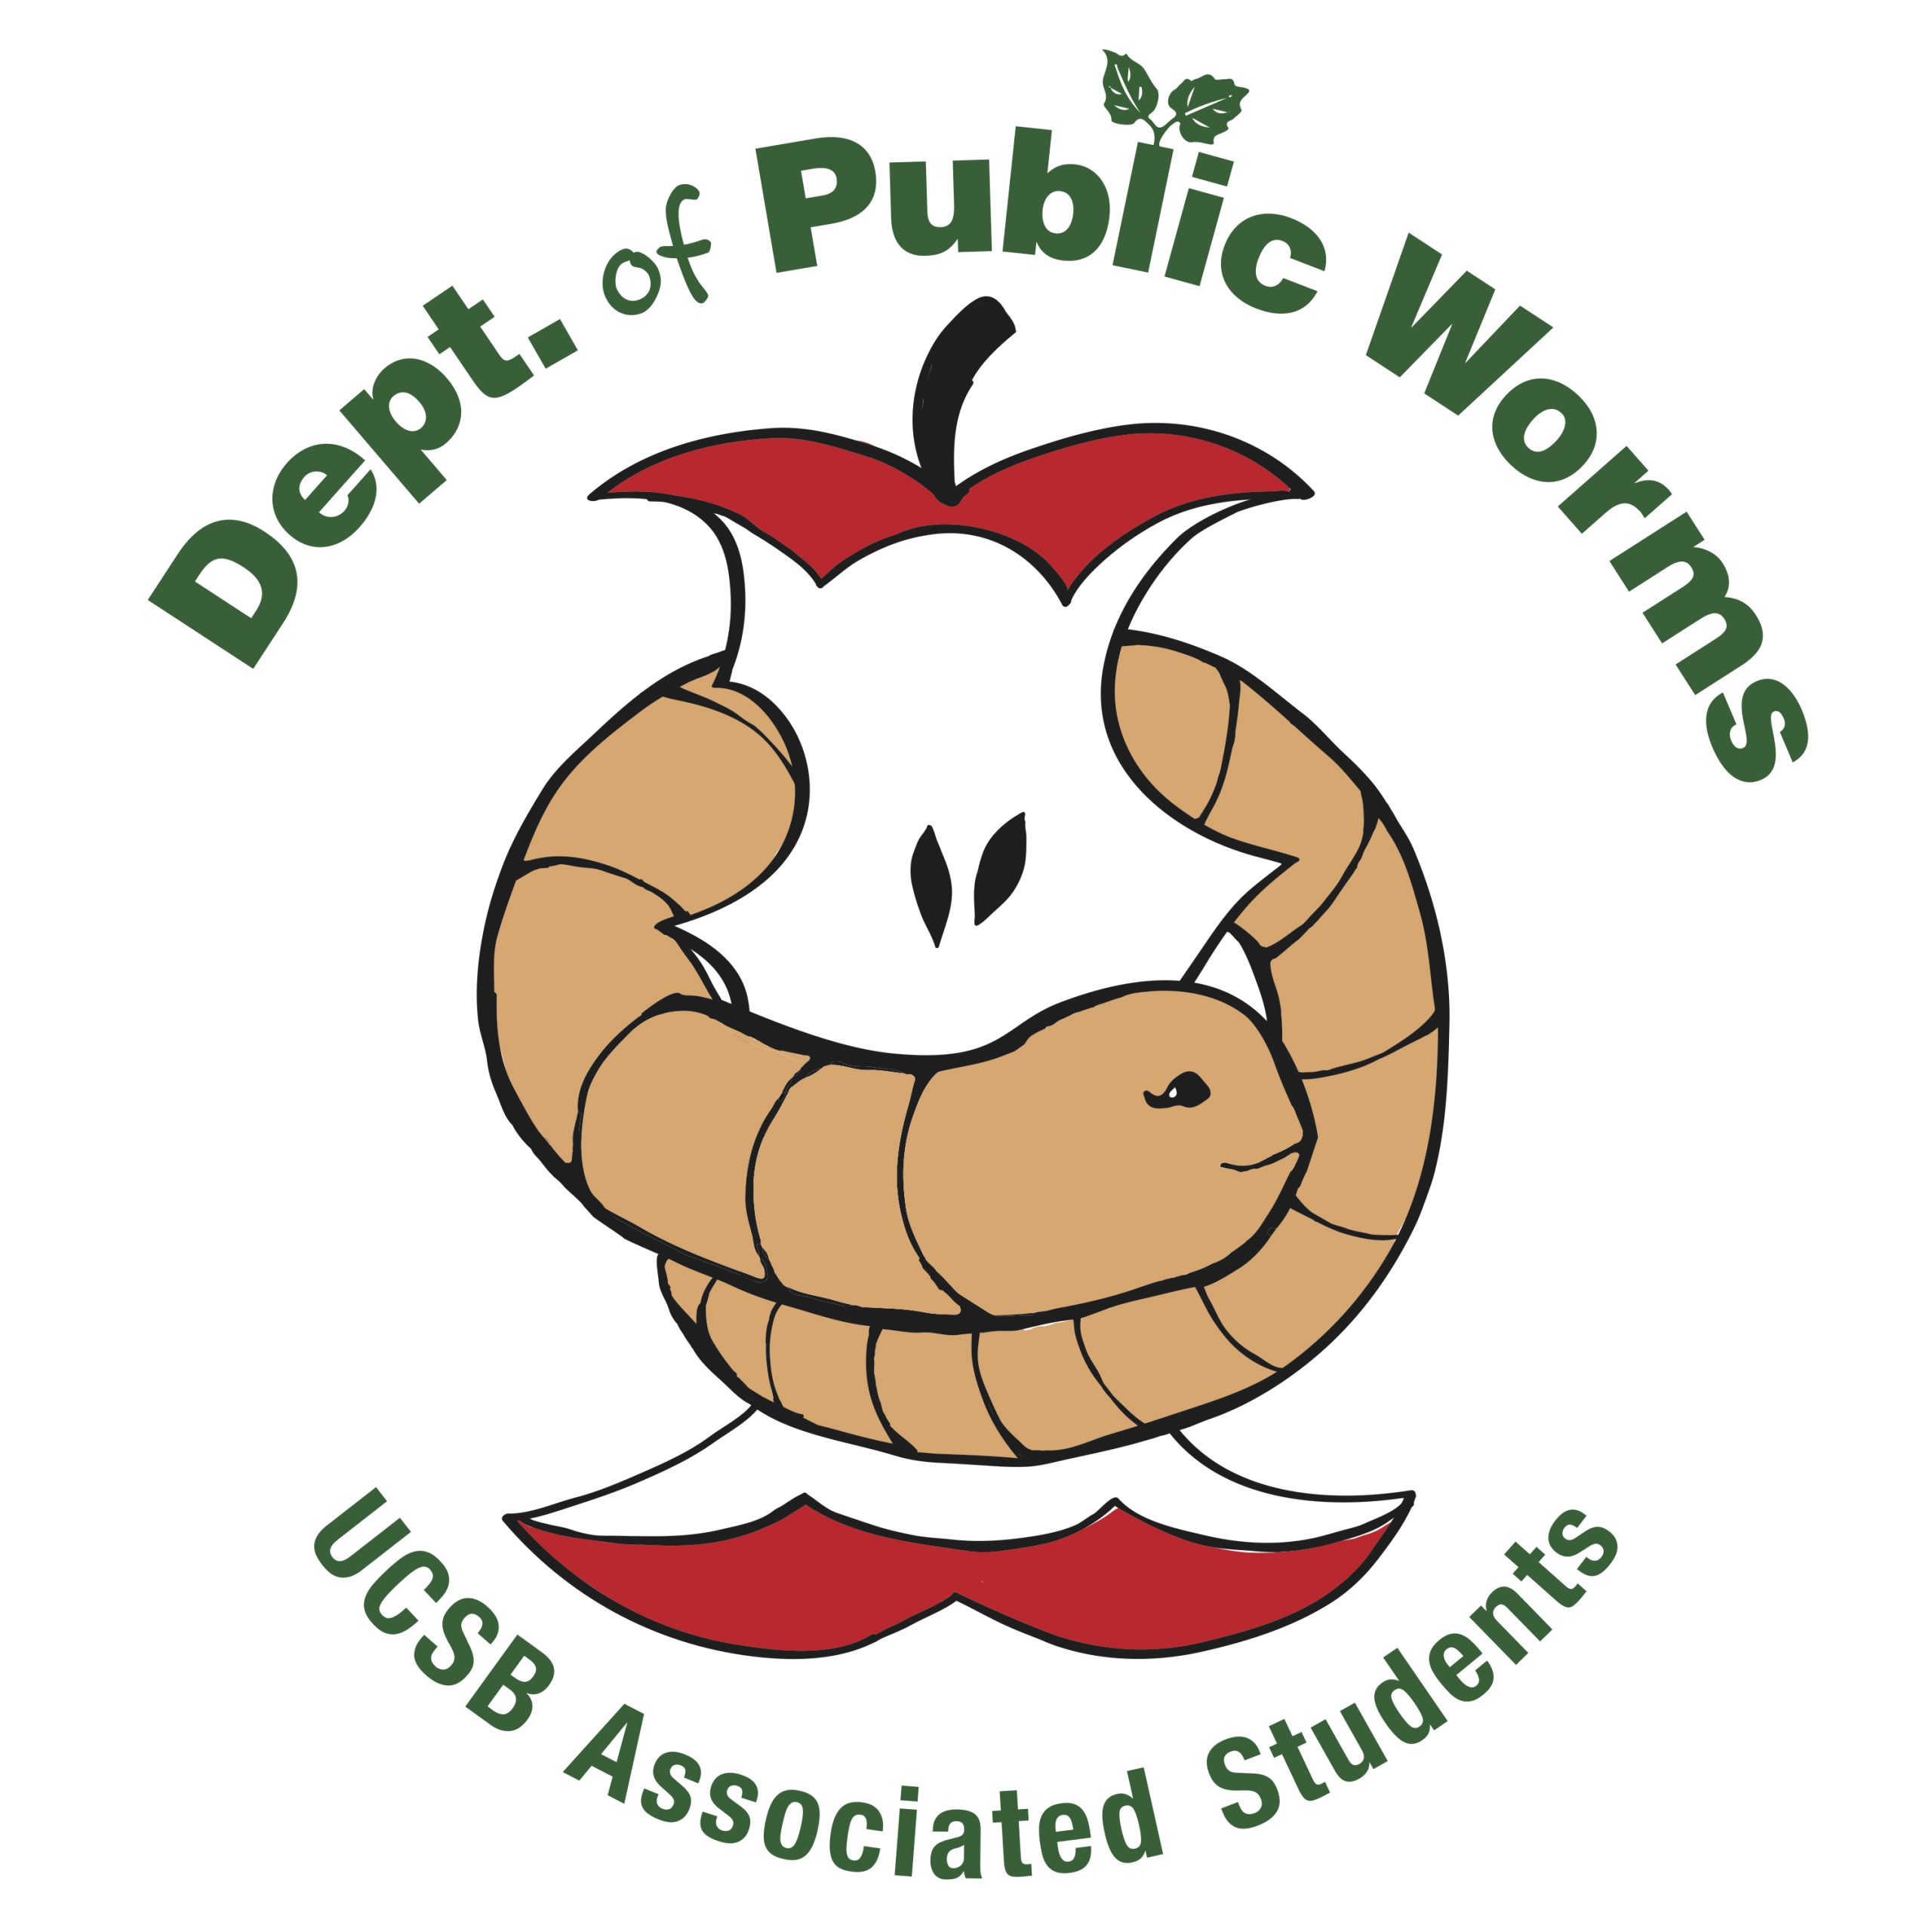 worms logo